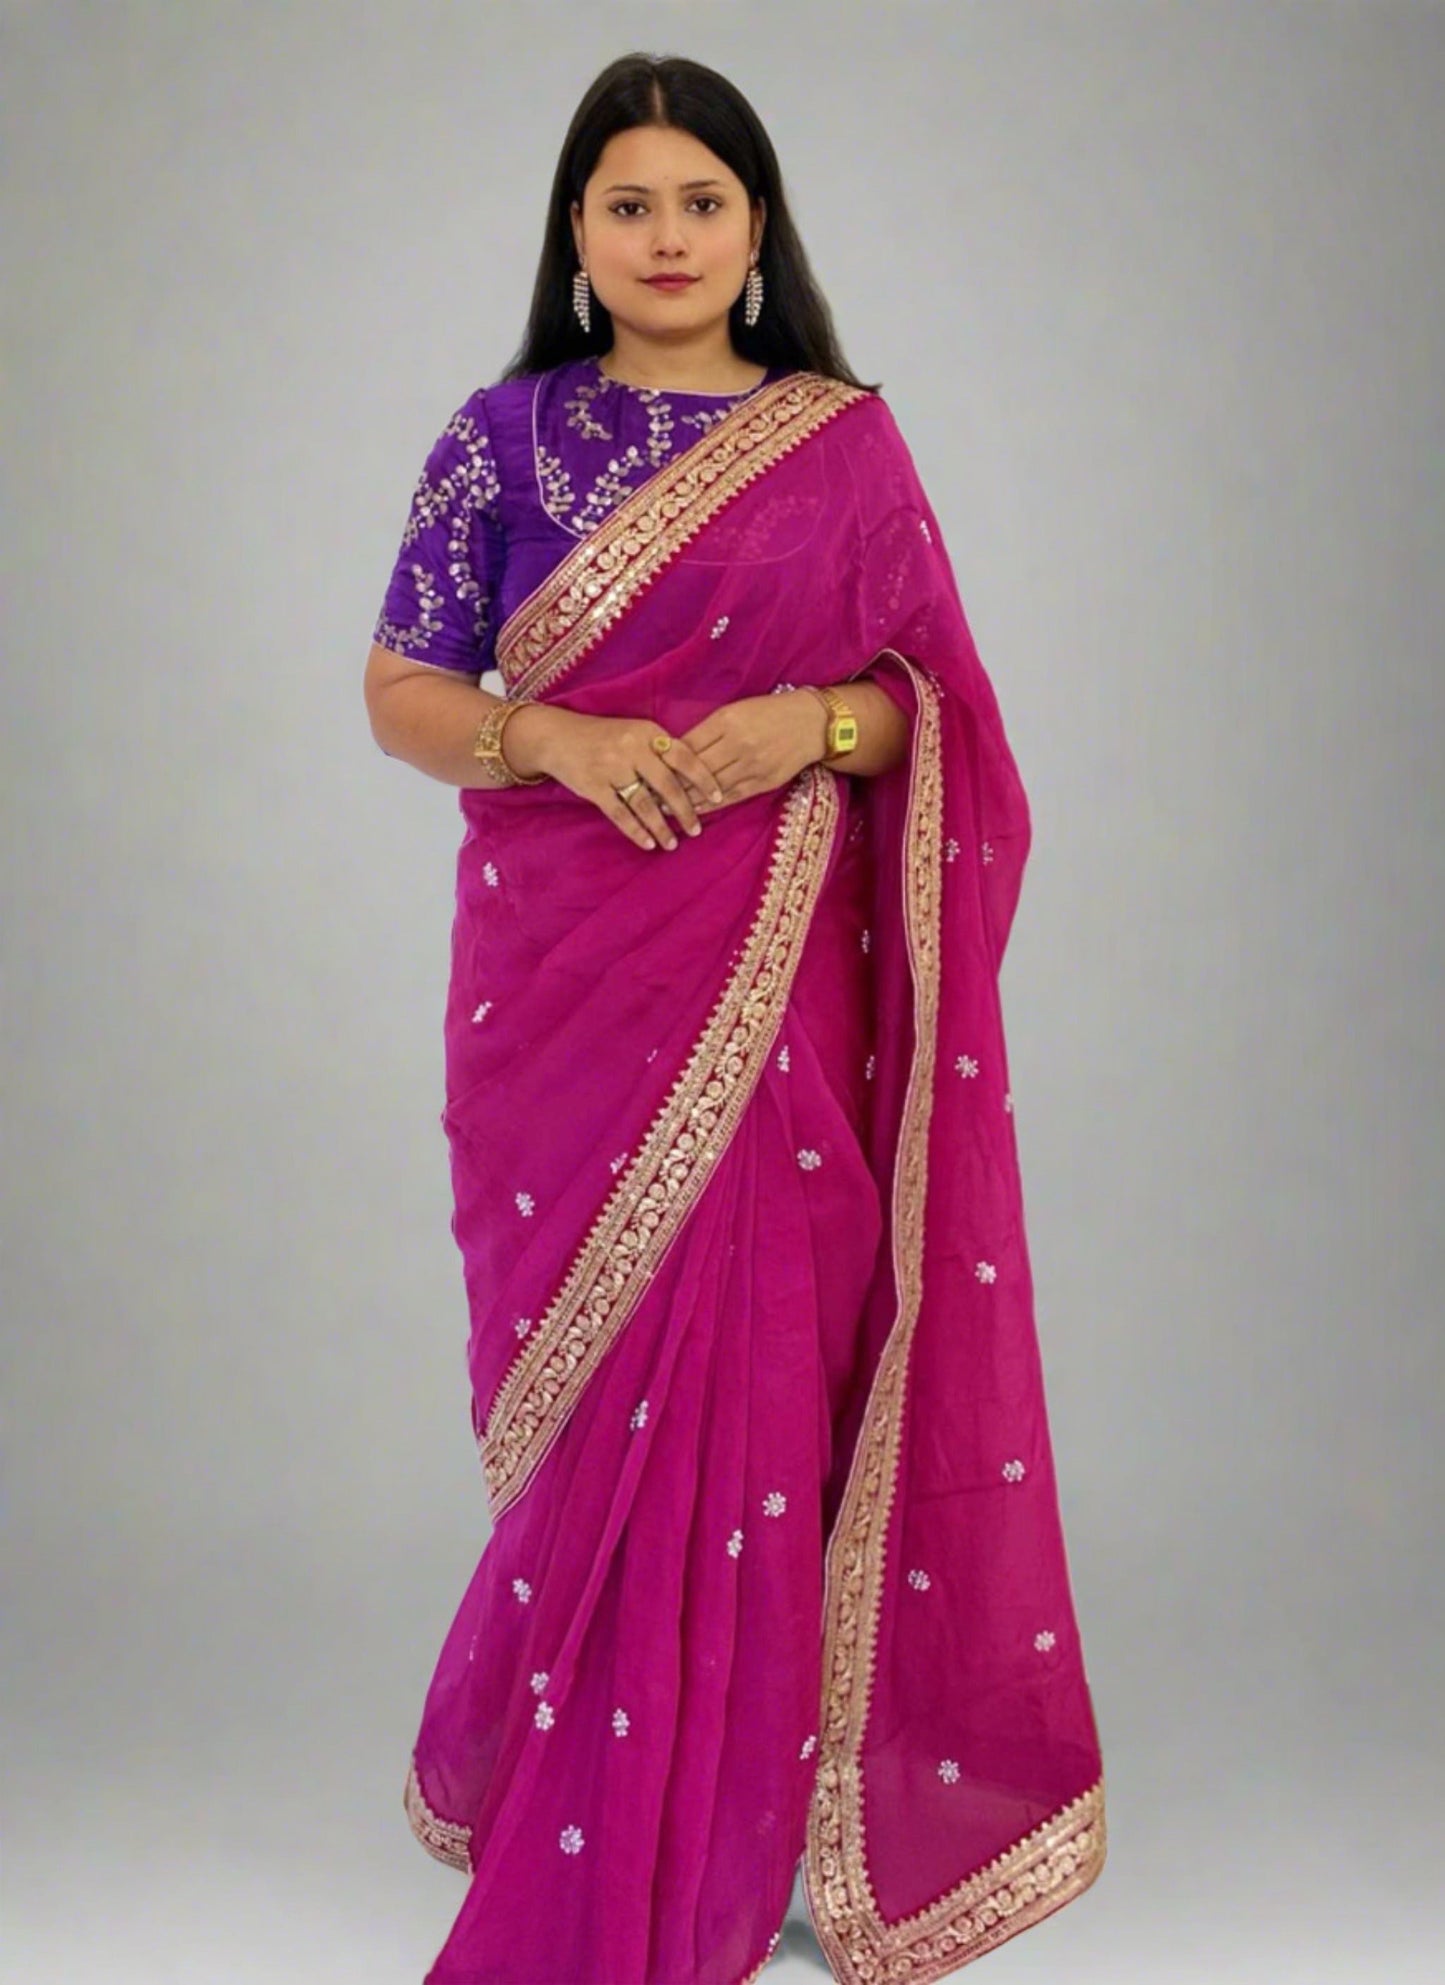 A woman wearing Pink Pearl Handwork Saree